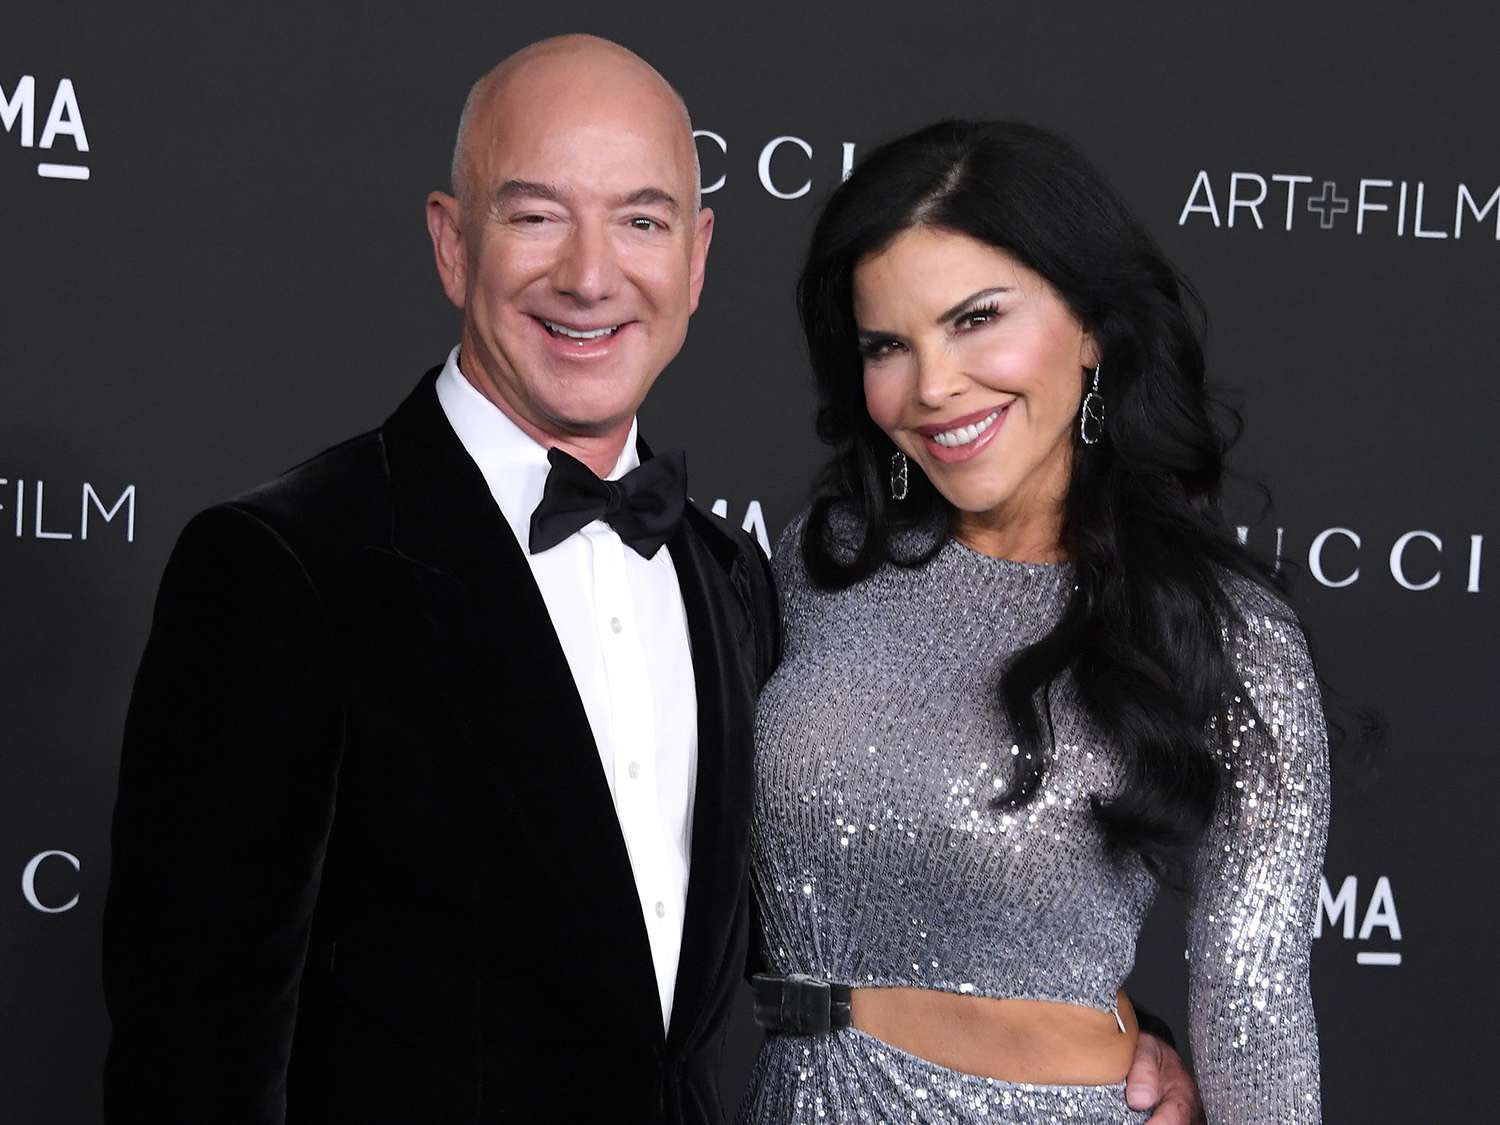 Jeff Bezos and Lauren Sanchez: Relationship timeline